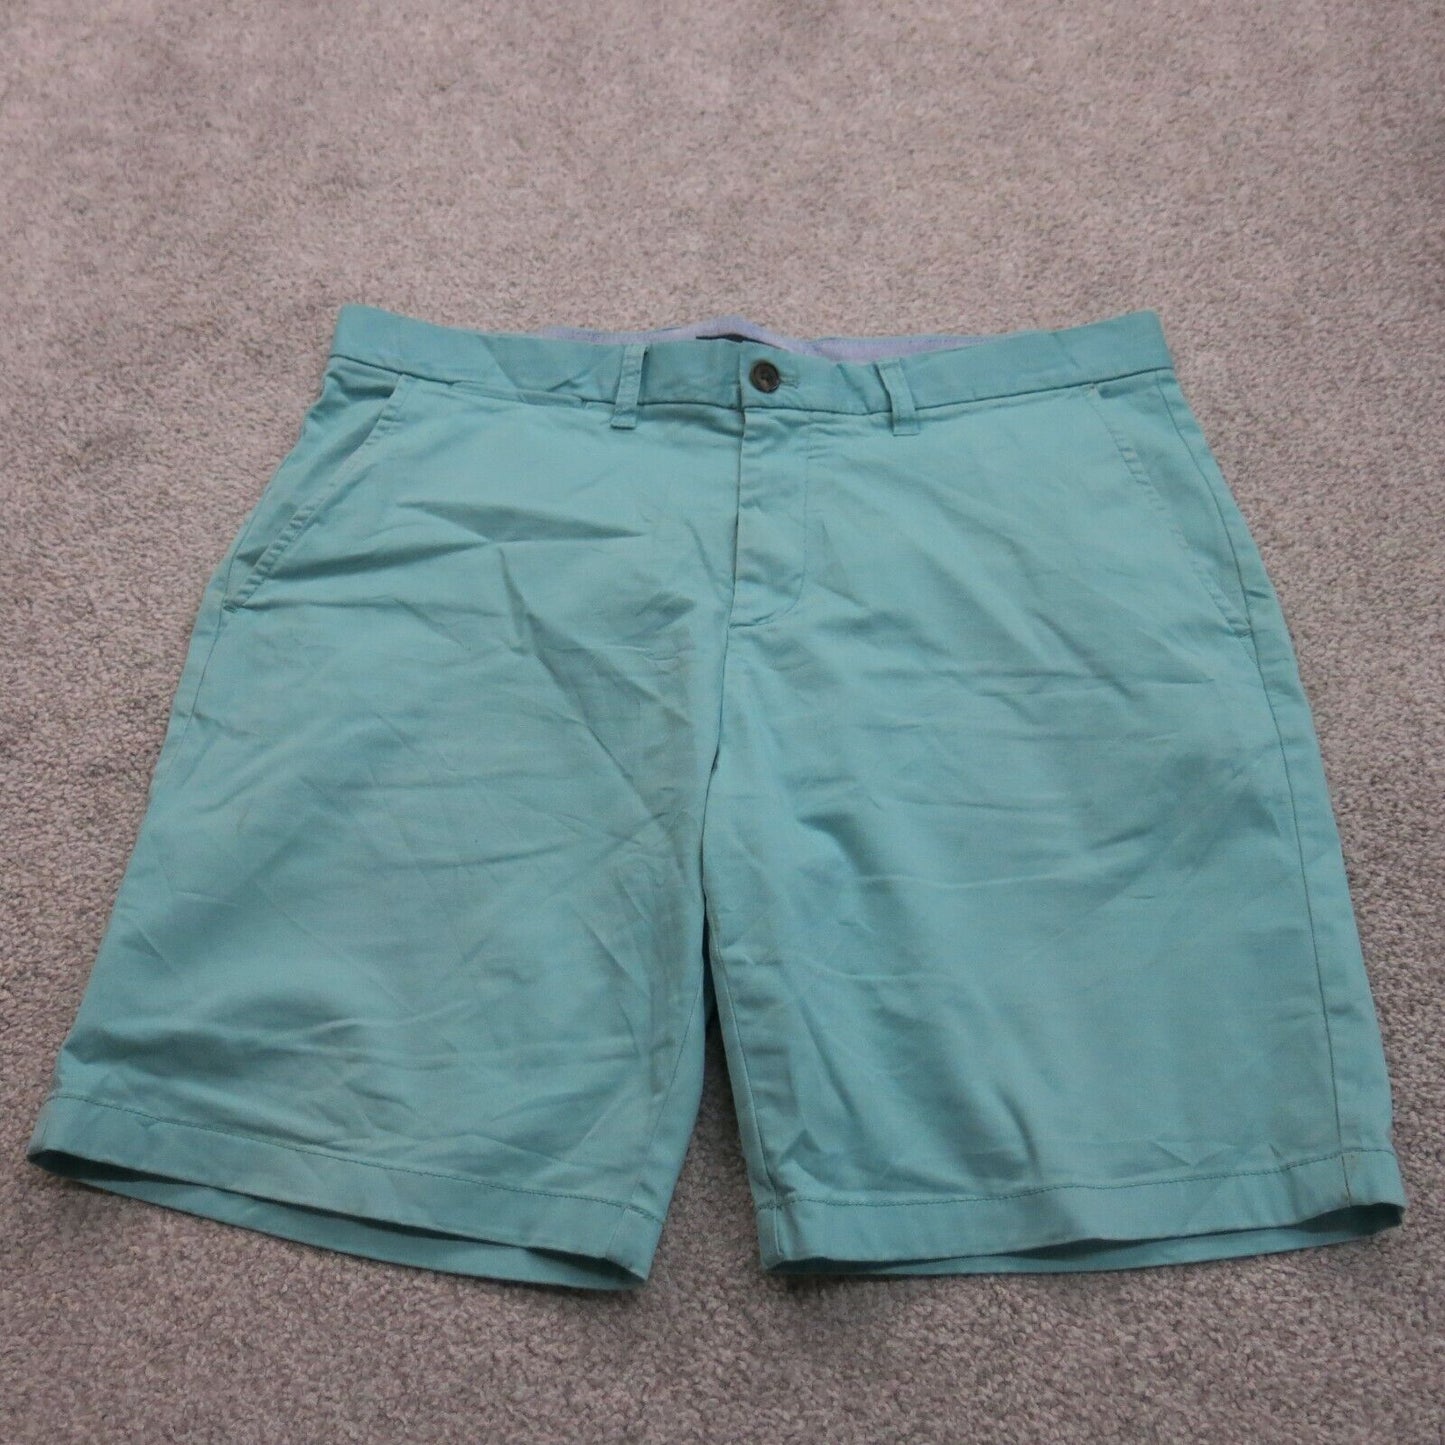 Tommy Hilfiger Mens Casual Chino Shorts Mid Rise Pocket Aqua Blue Size 36